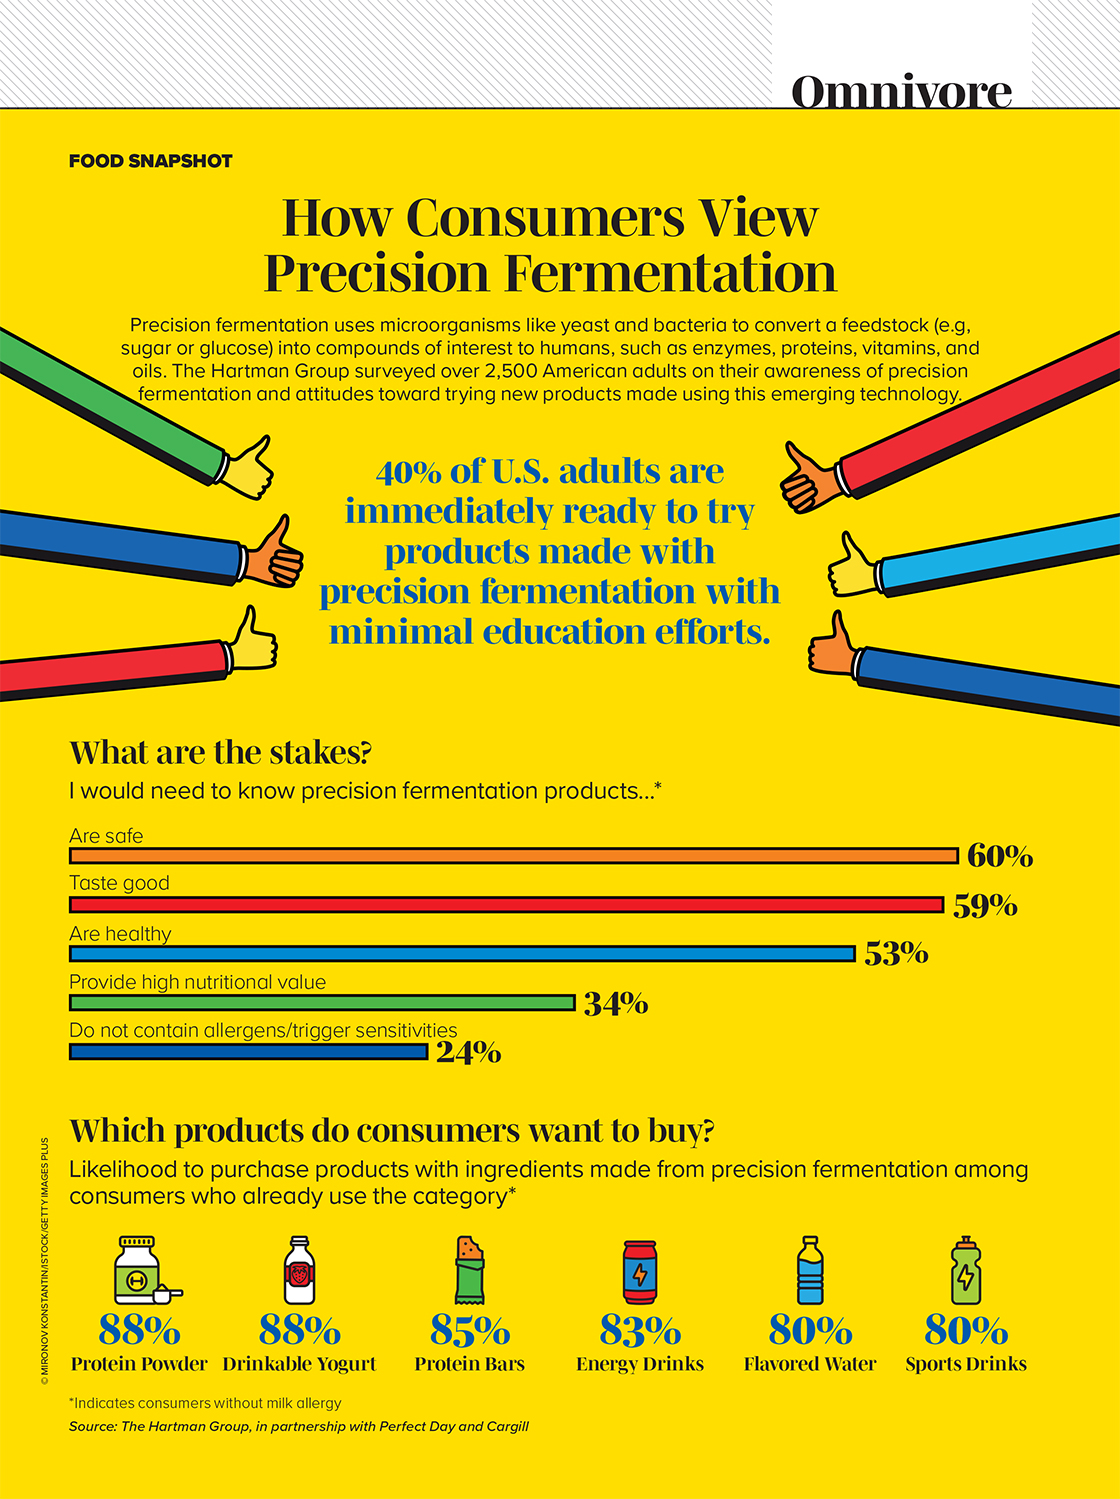 How Consumers View Precision Fermentation